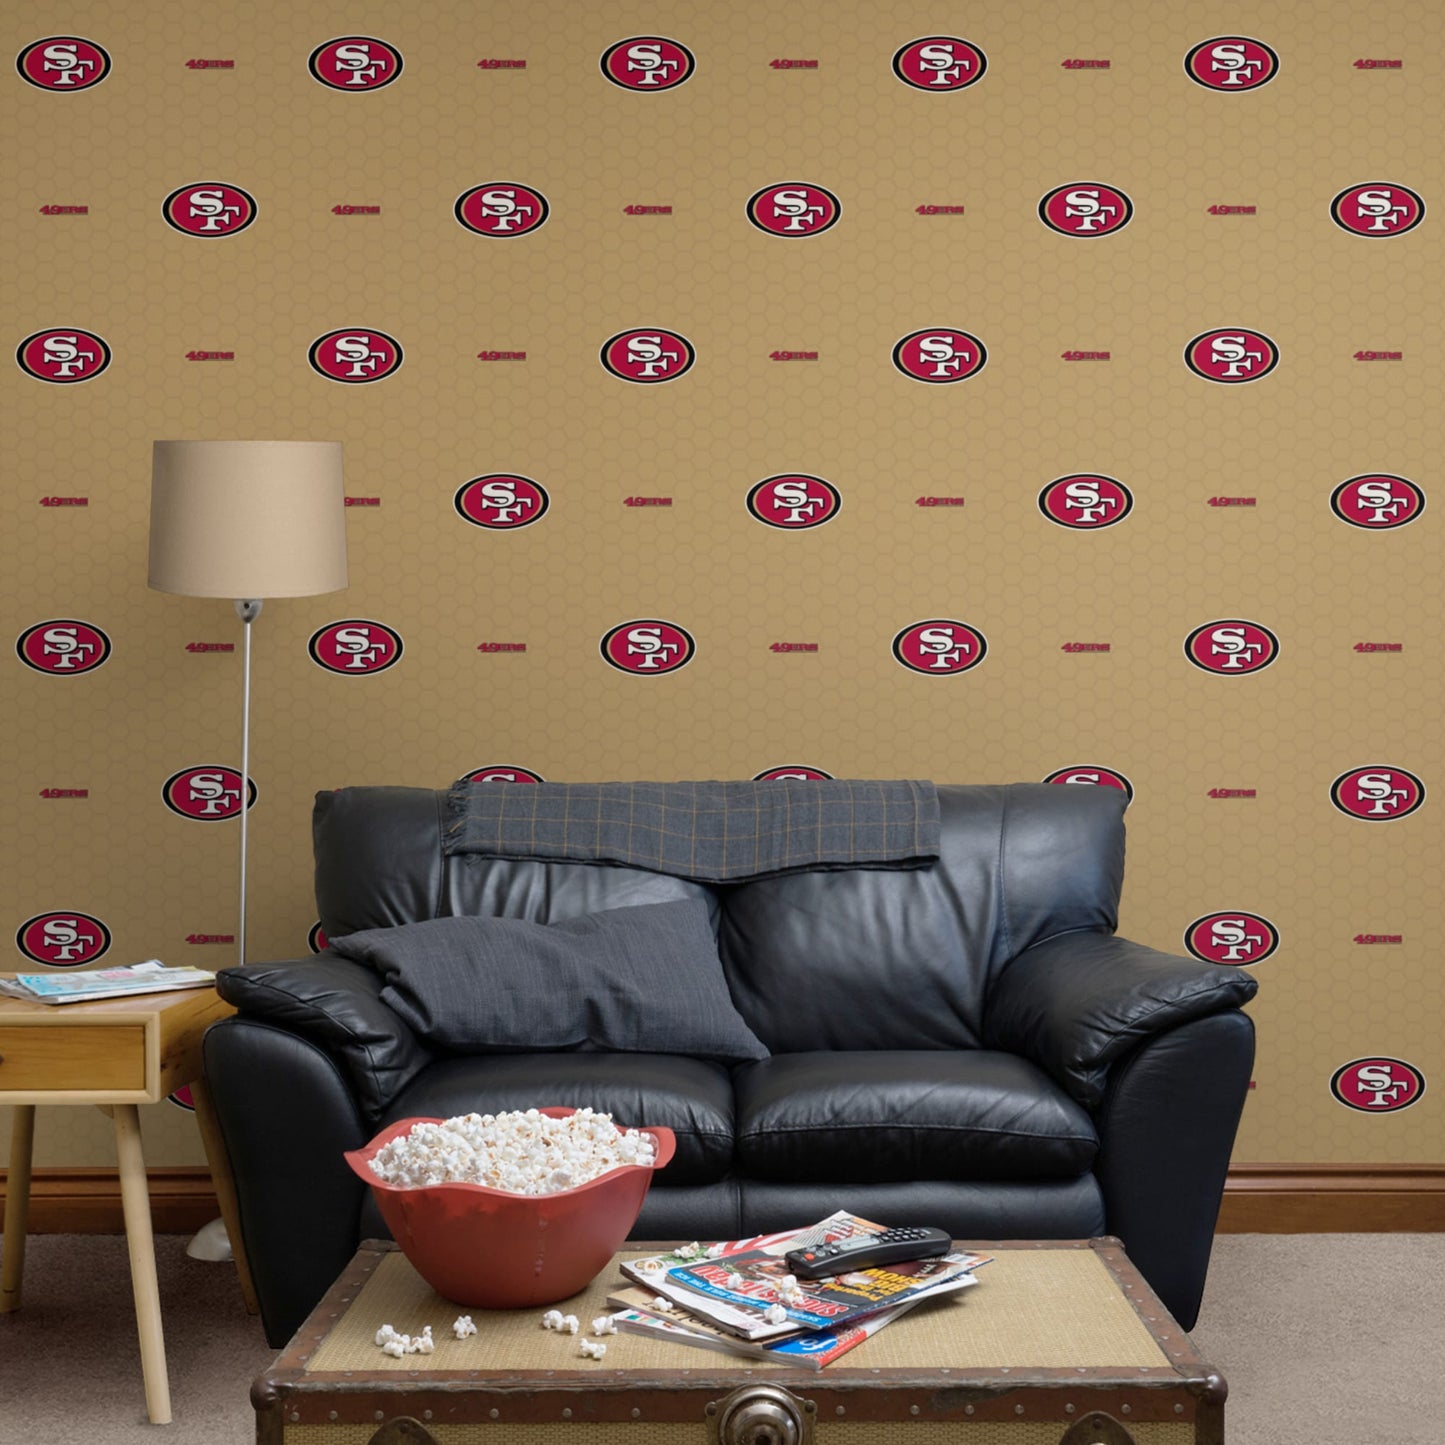 49ers wallpaper